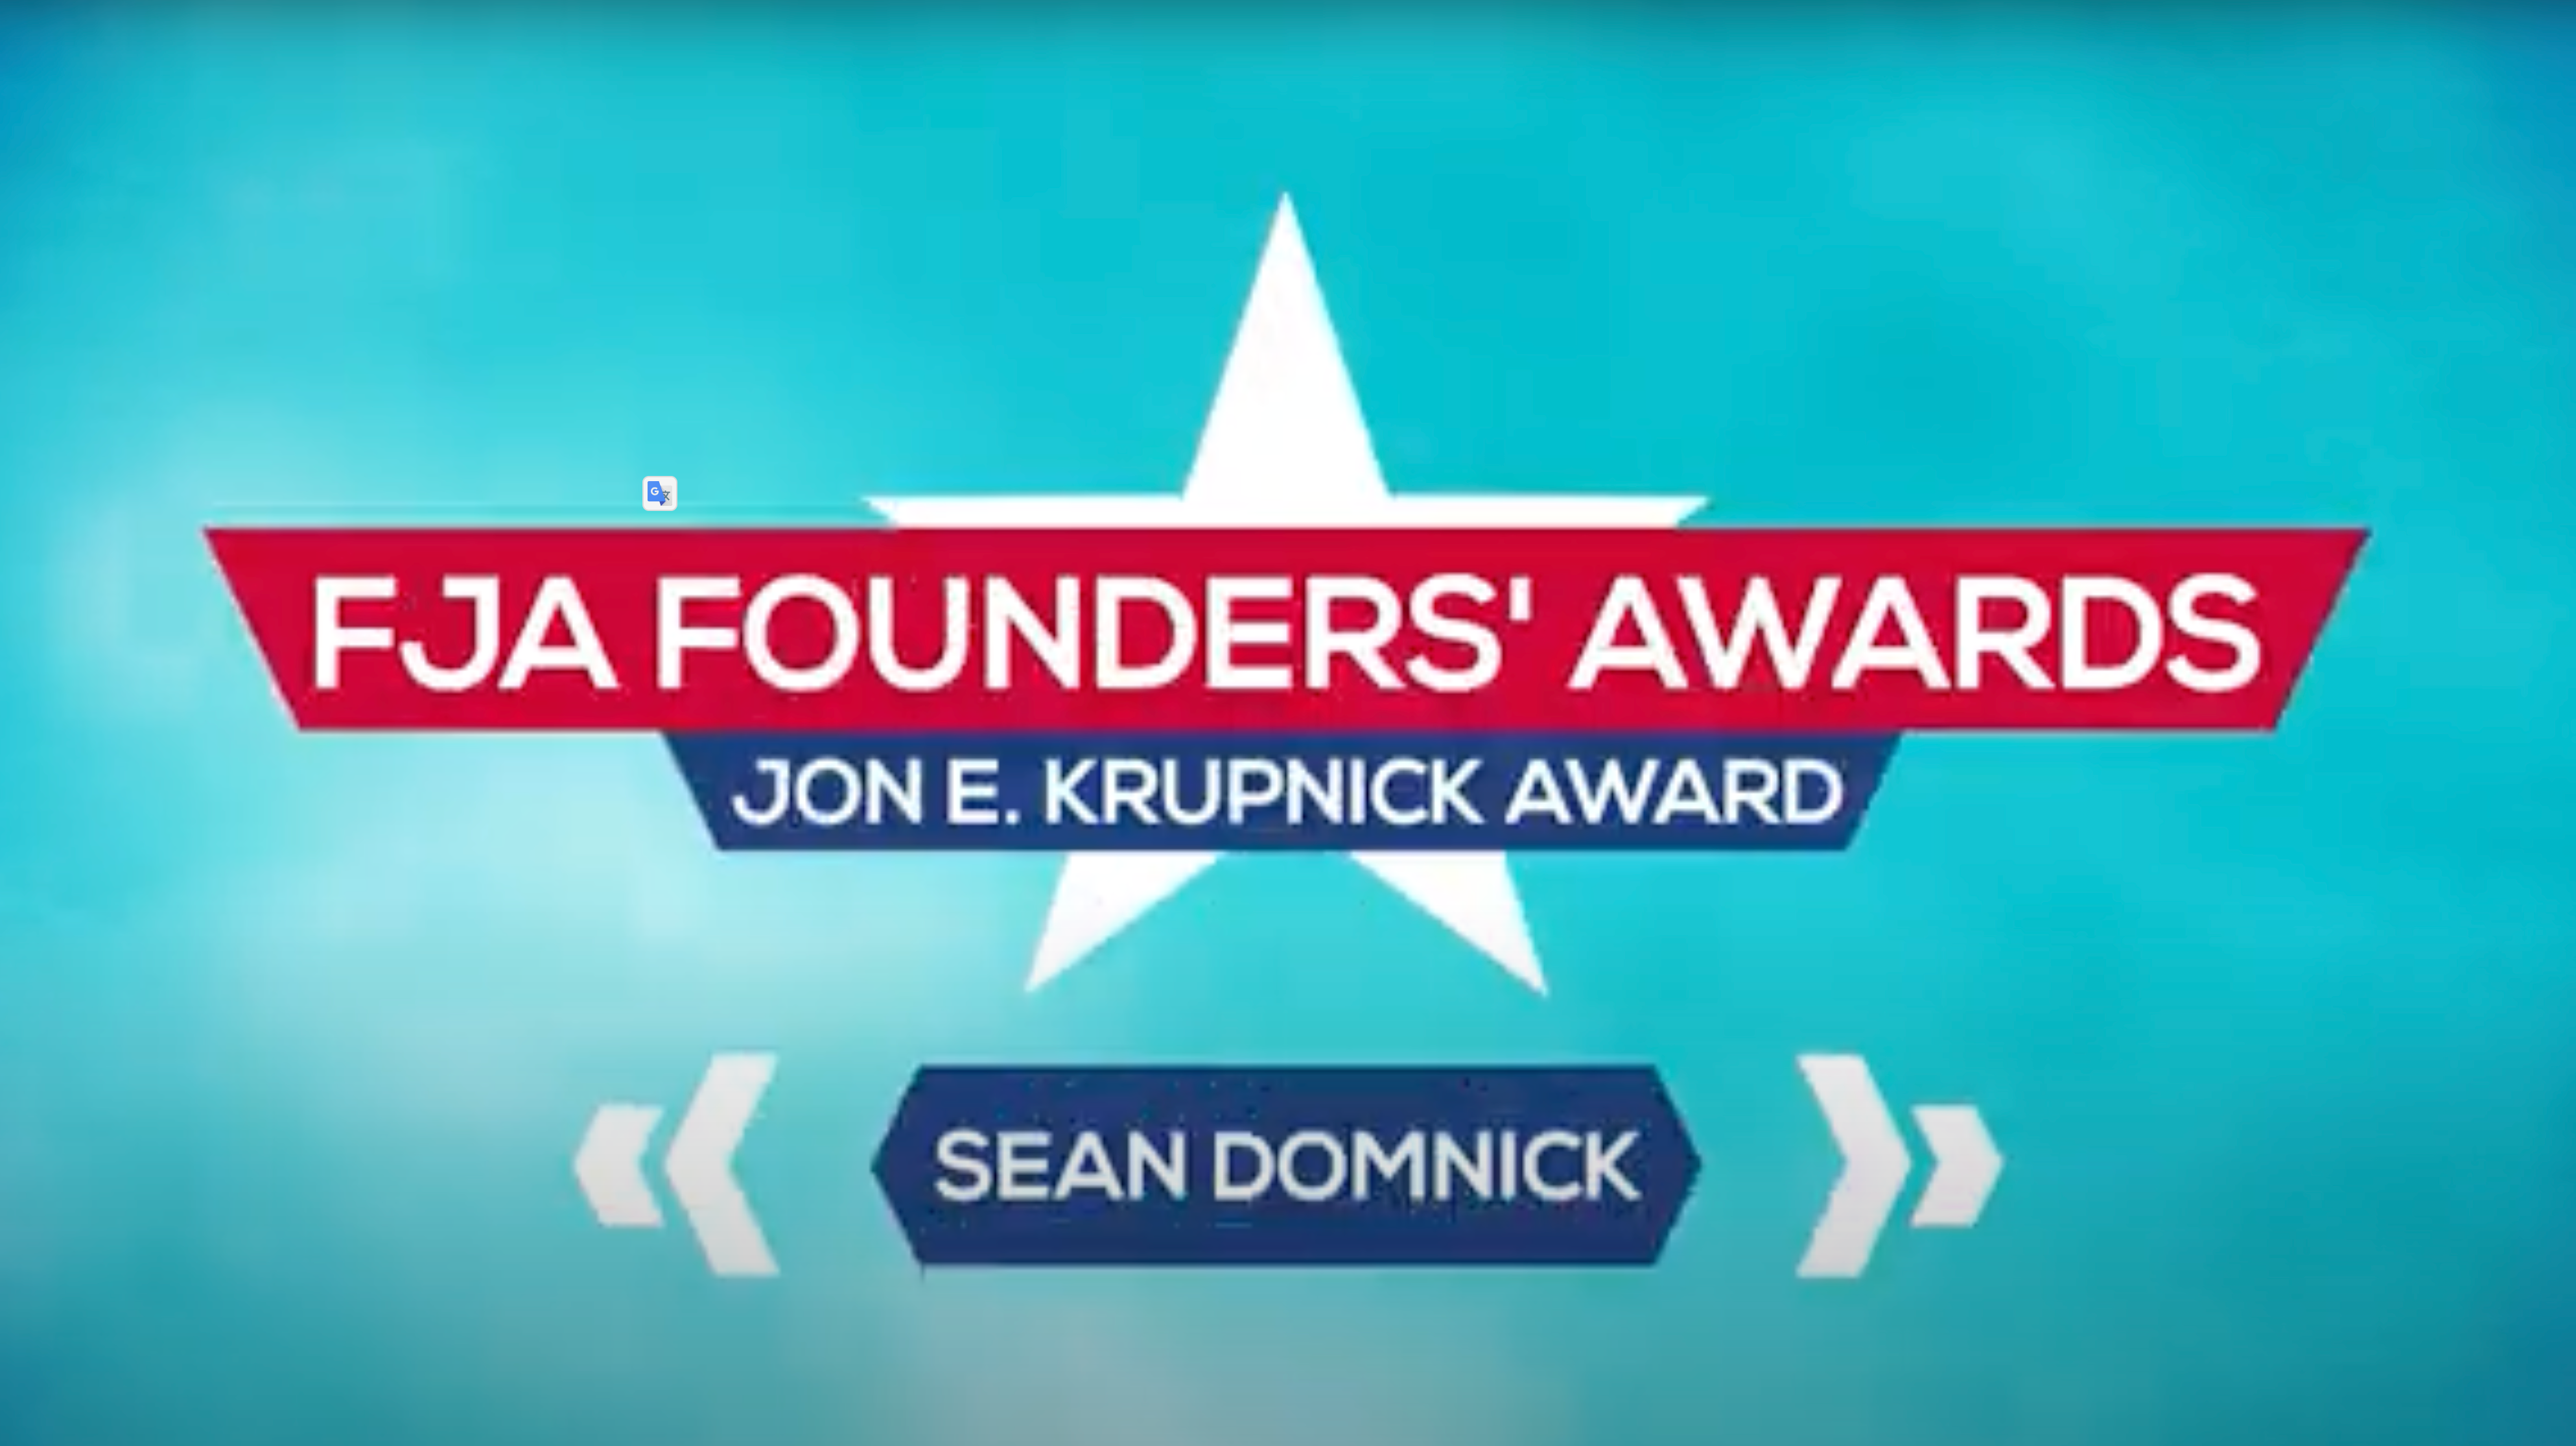 FJA Founders' Awards - Sean Domnick